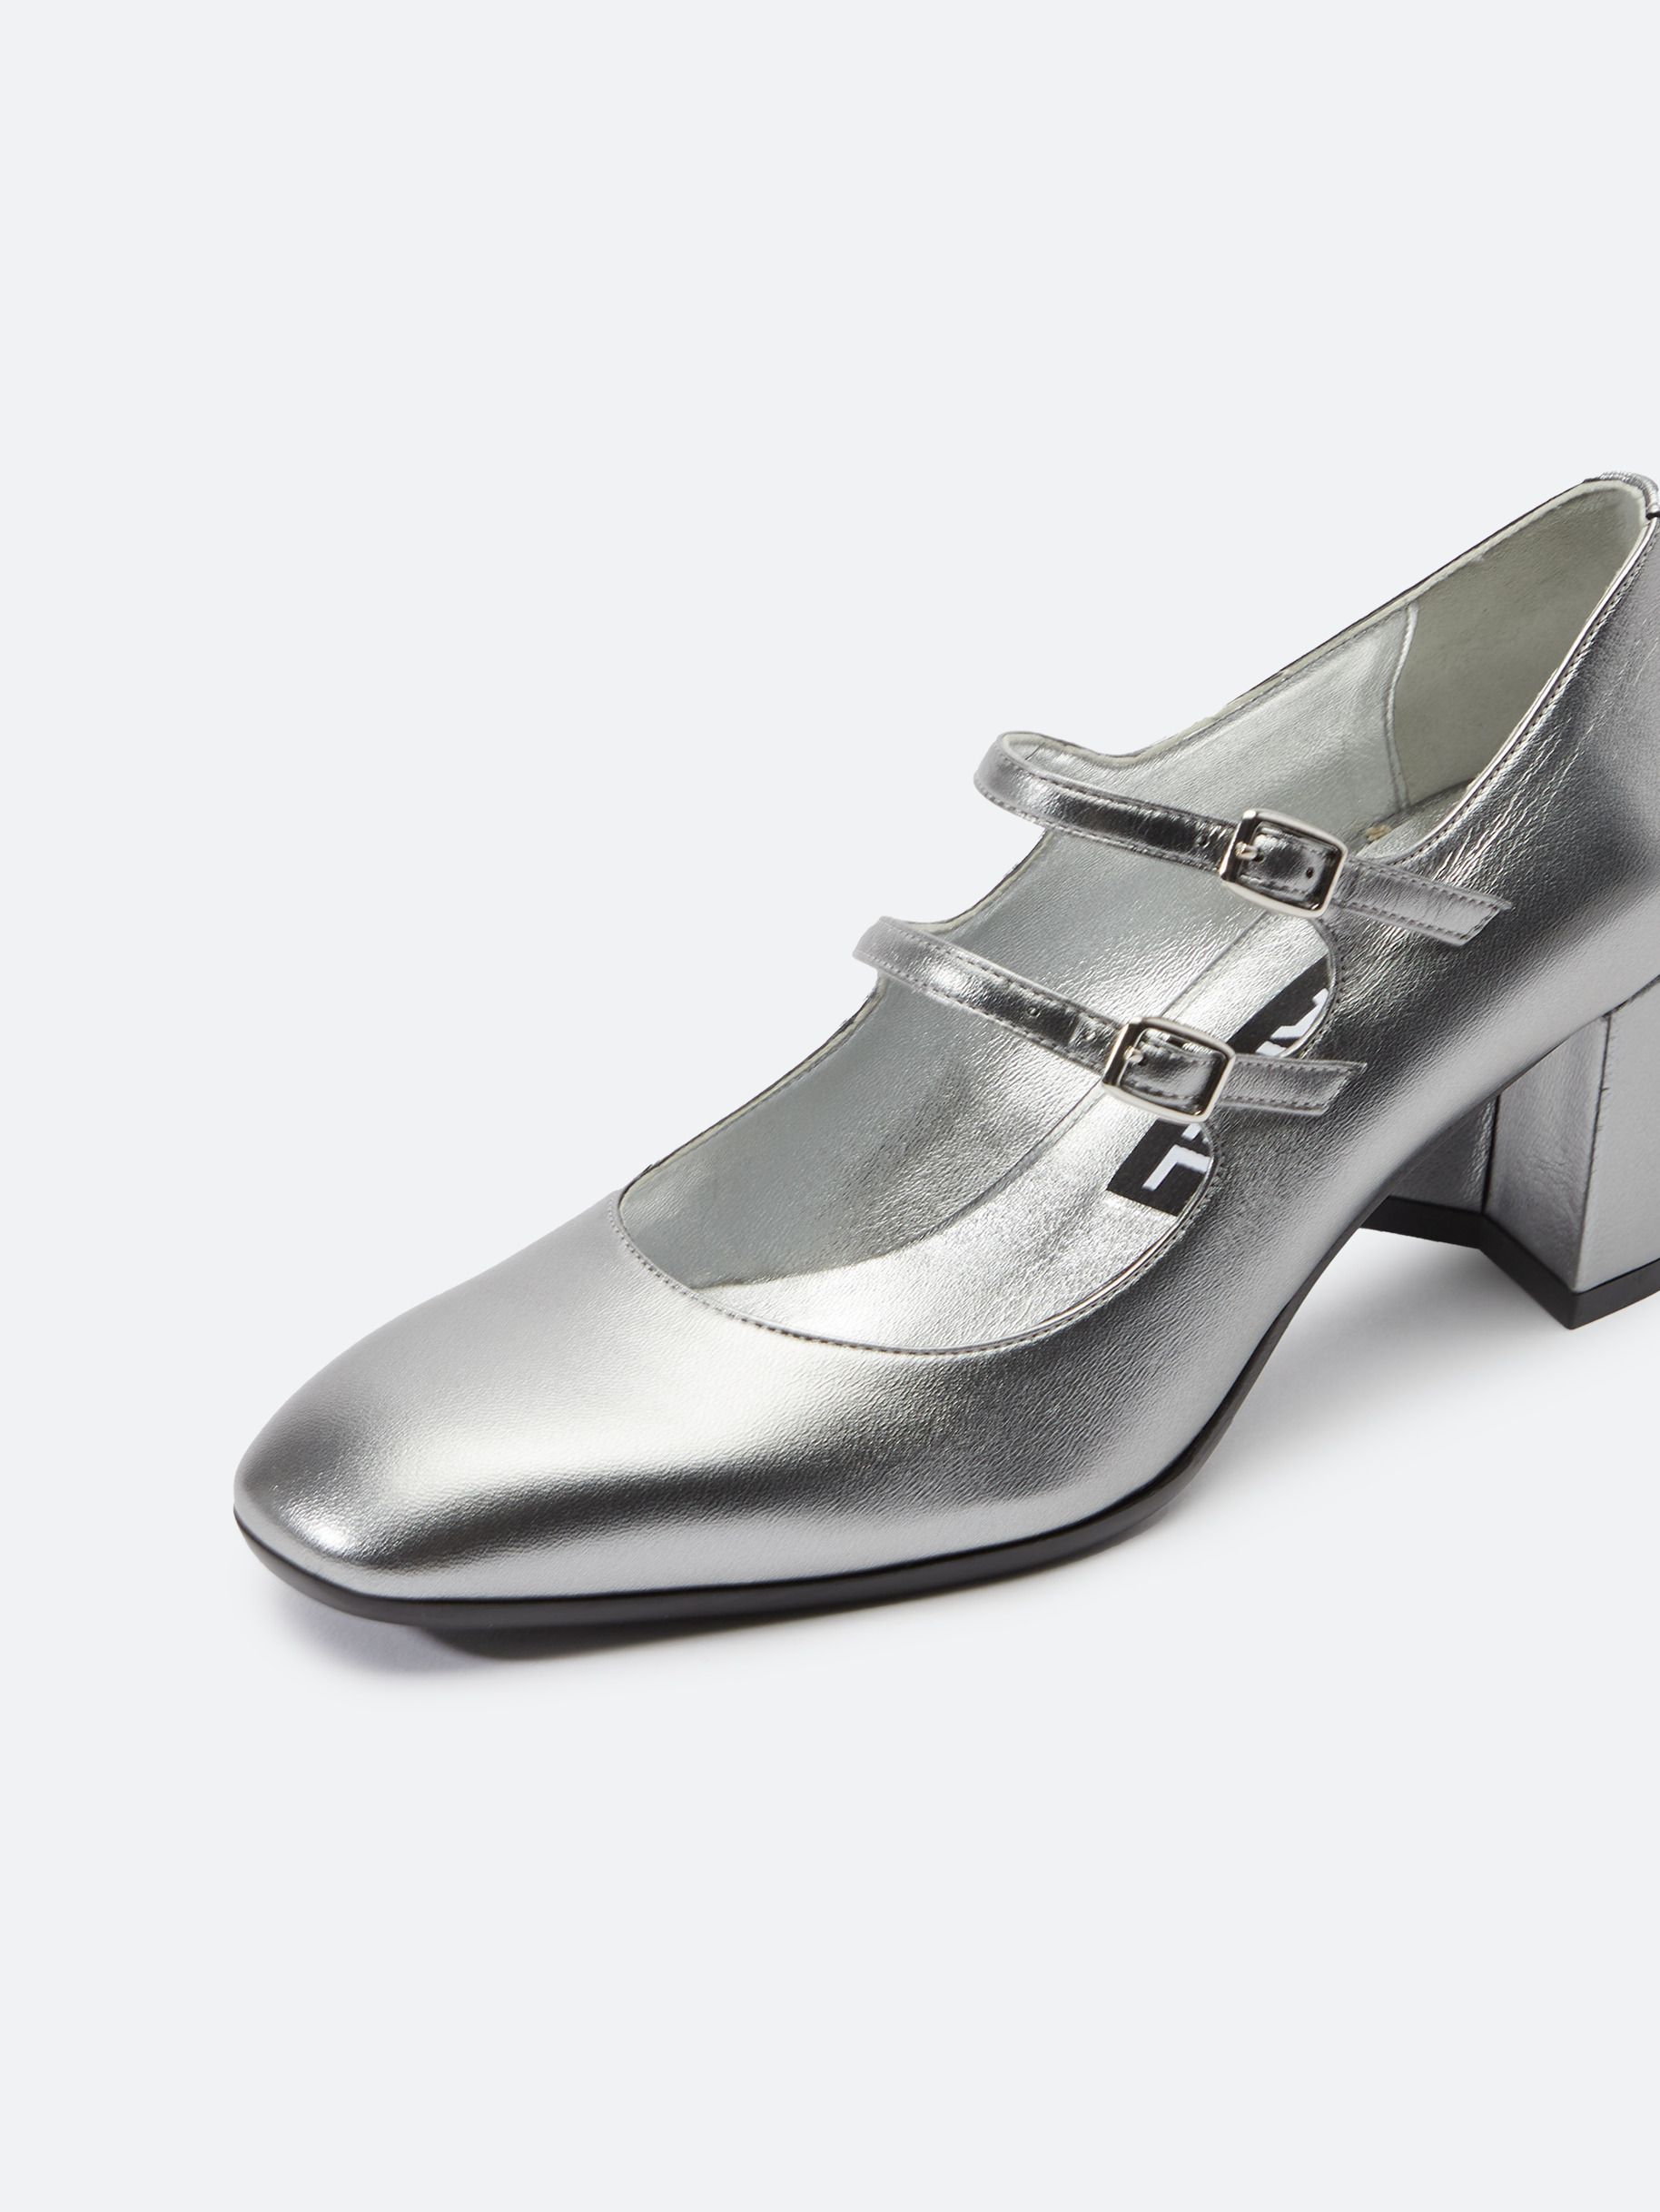 ALICE gunmetal grey leather Mary Janes | Carel Paris Shoes